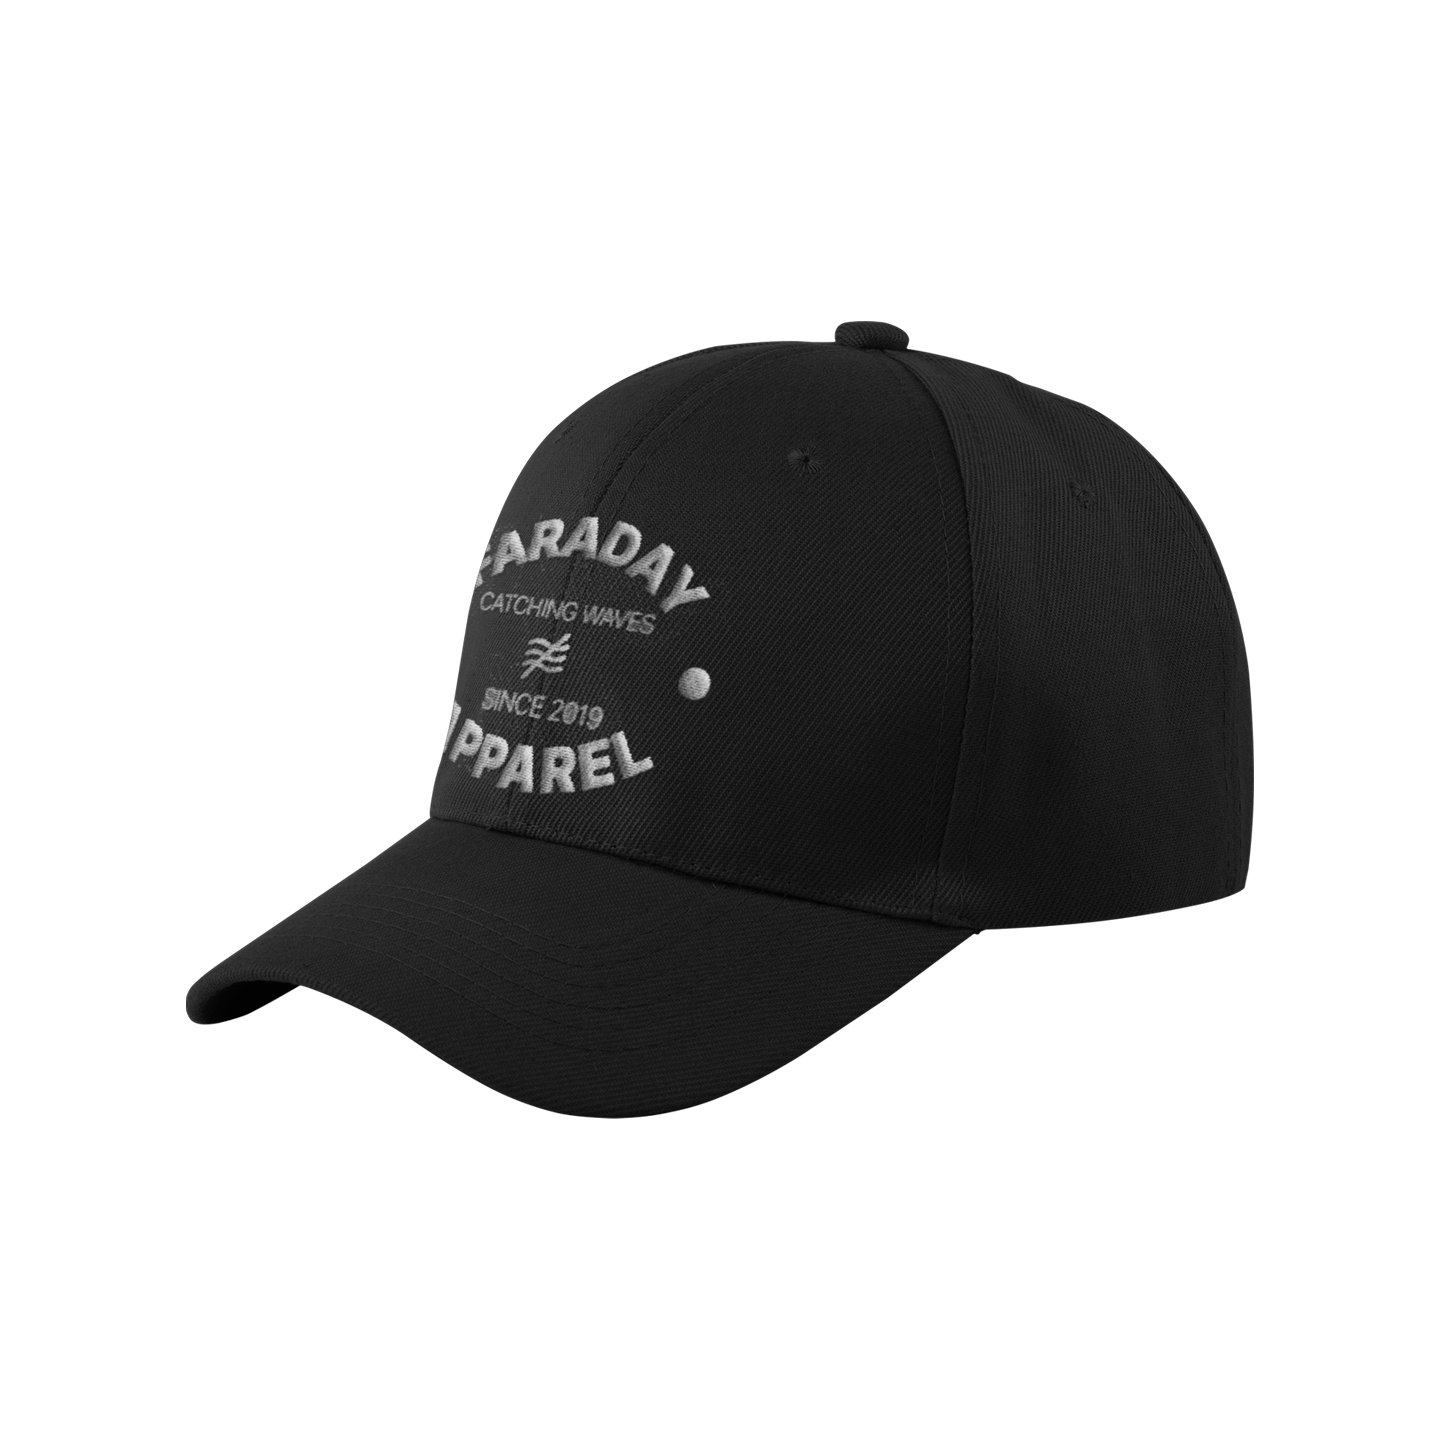 EMF Cap Faraday Hat